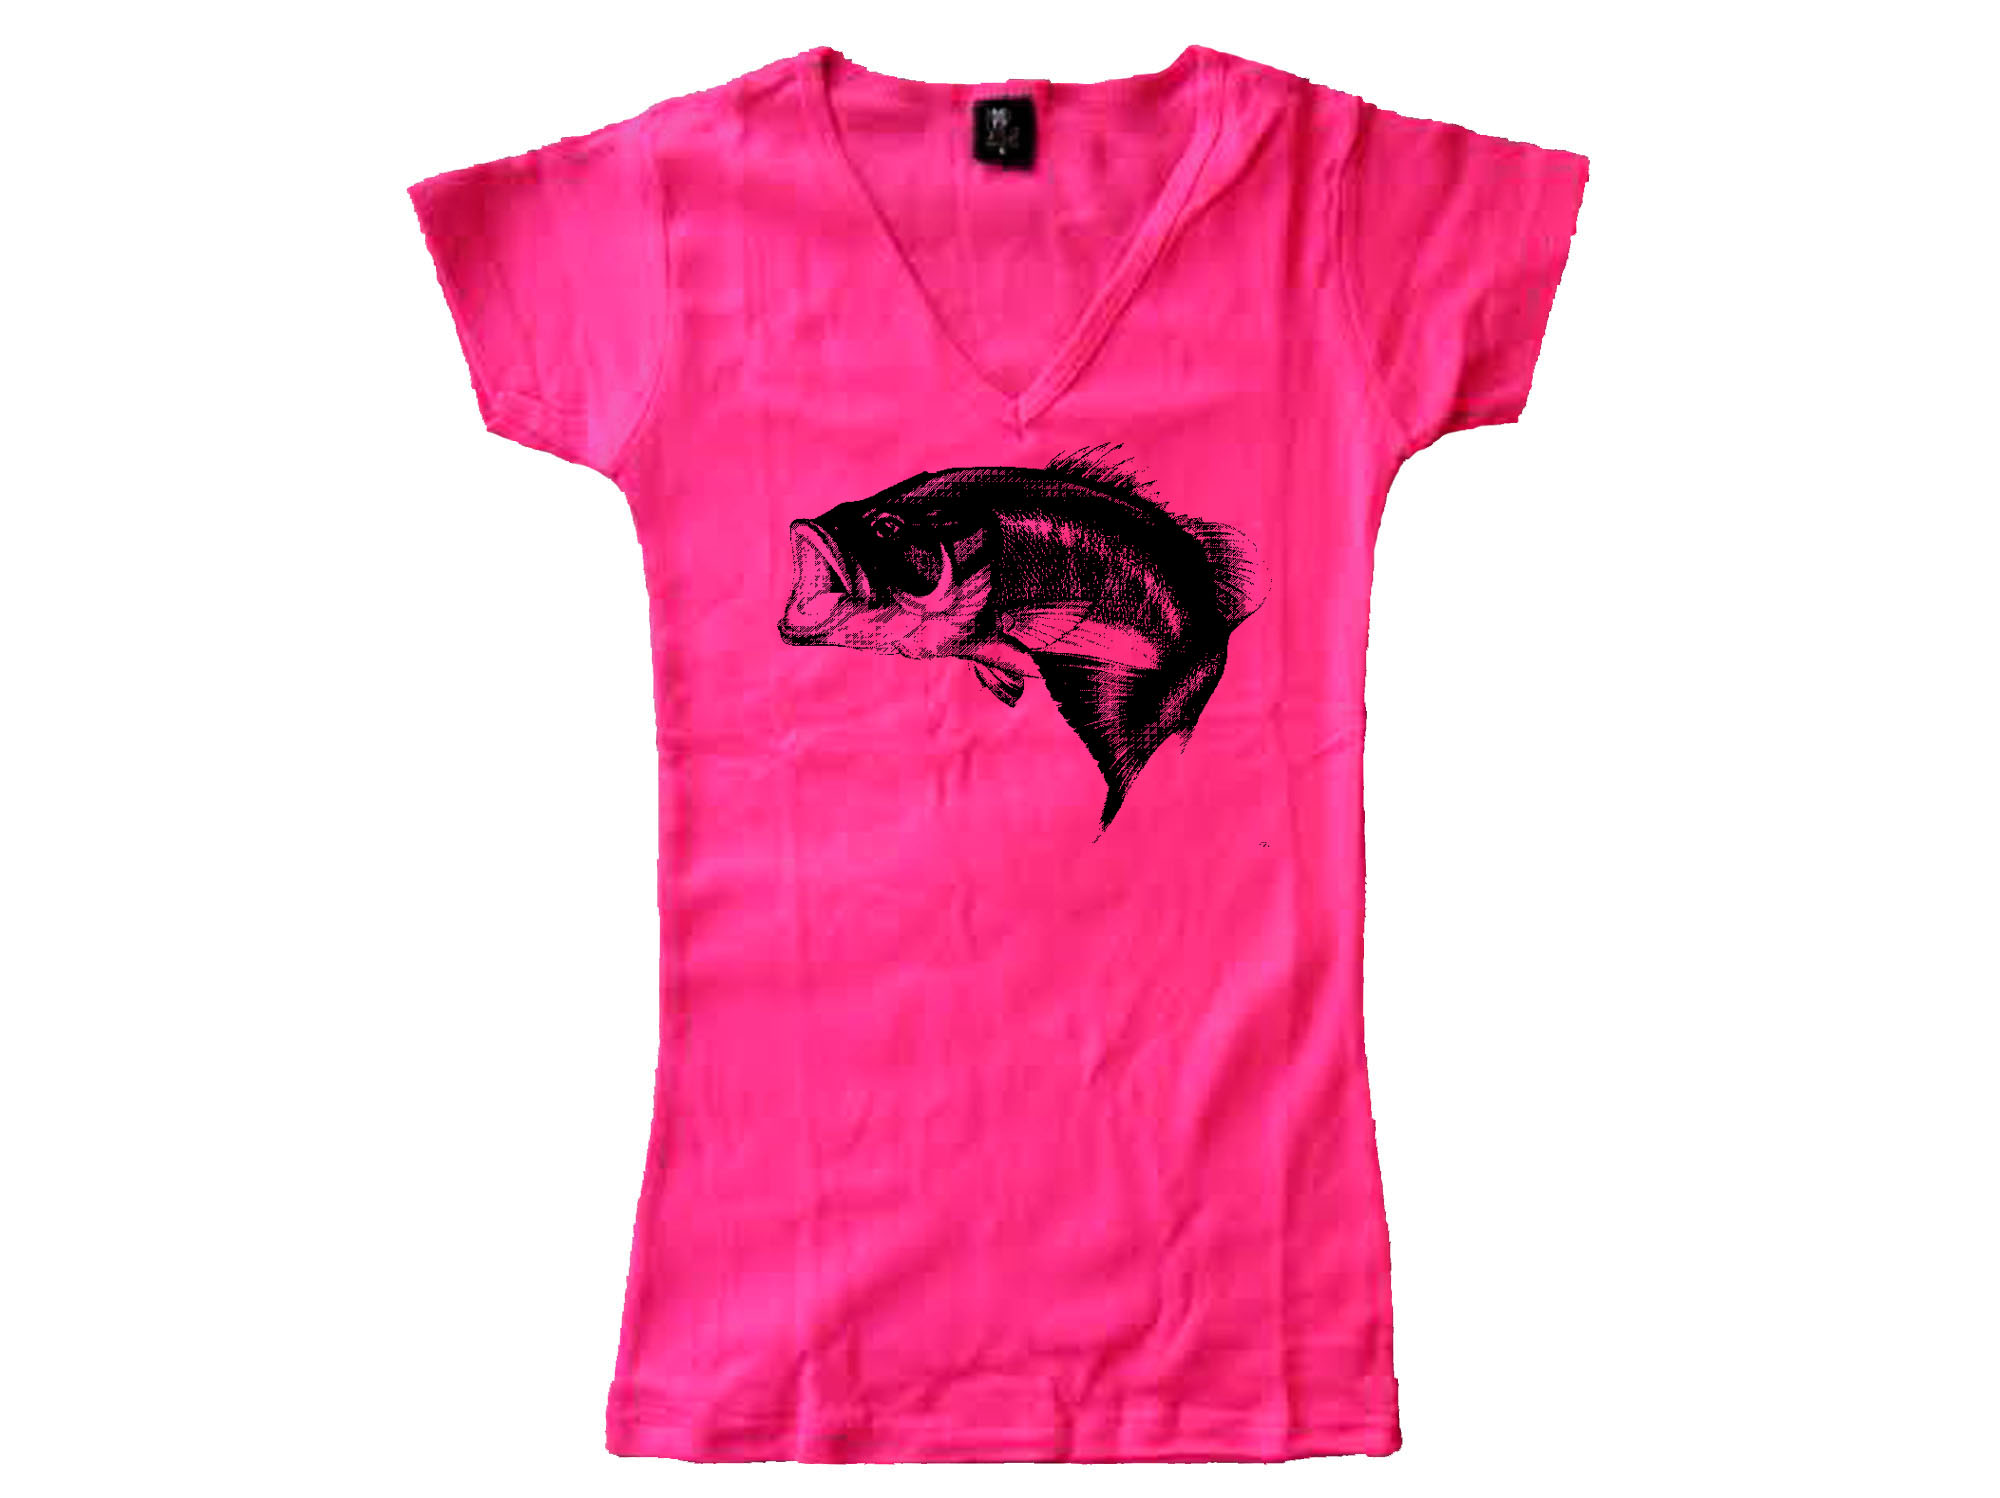 Bass fish fishing gifts woman pink t shirt